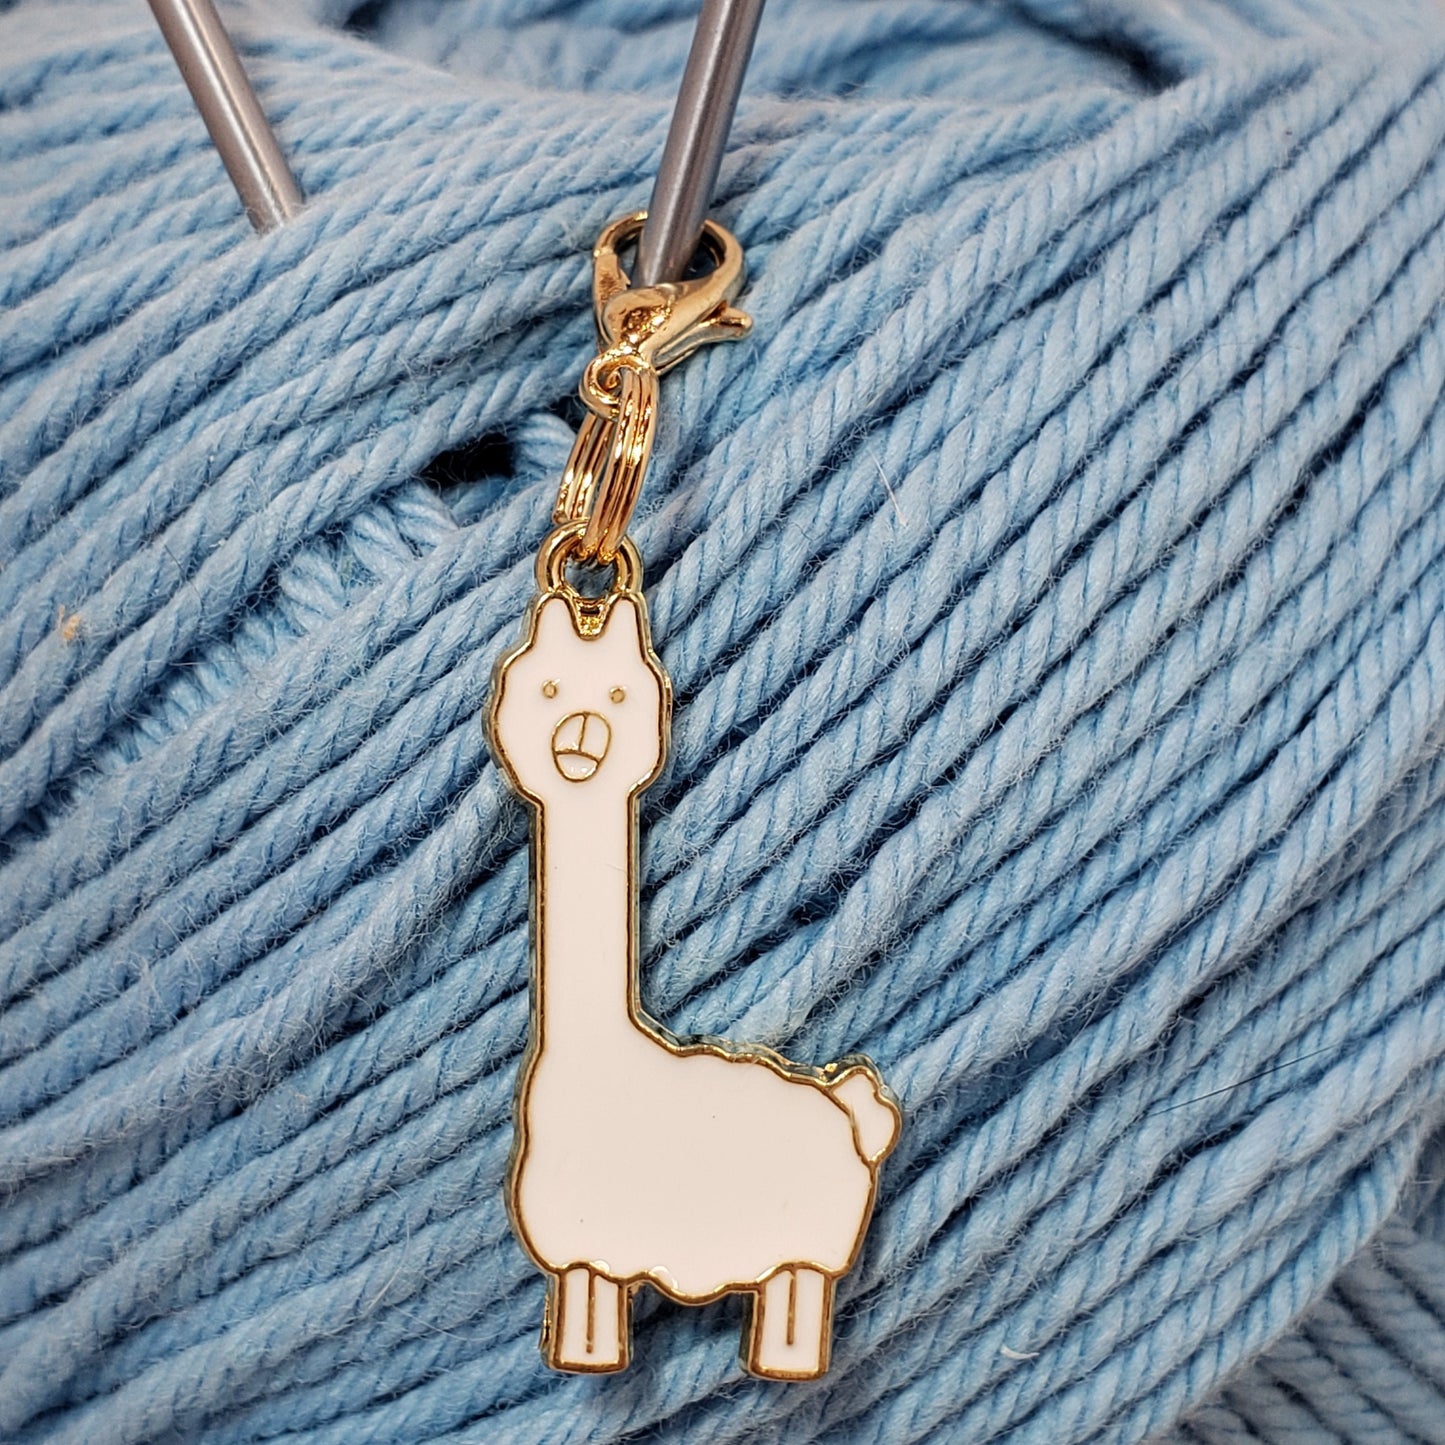 Alpaca Stitch Markers for Knitting, 4pc | Crochet stitch marker, progress keeper, project bag charms, crochet accessories